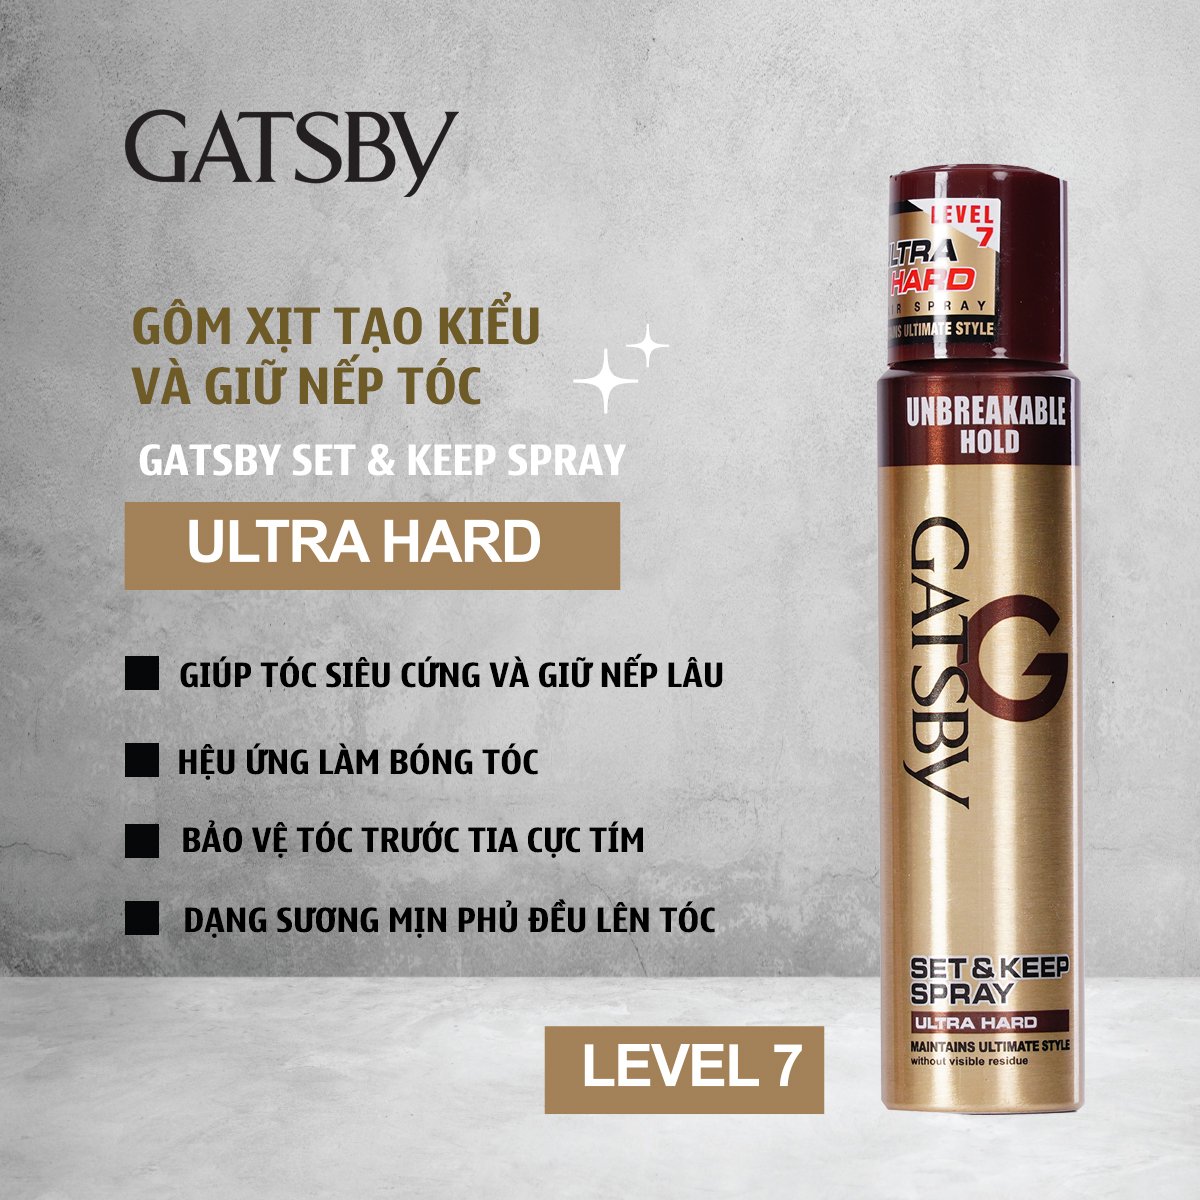 Gatsby Ultra Hard Set & Keep Spray